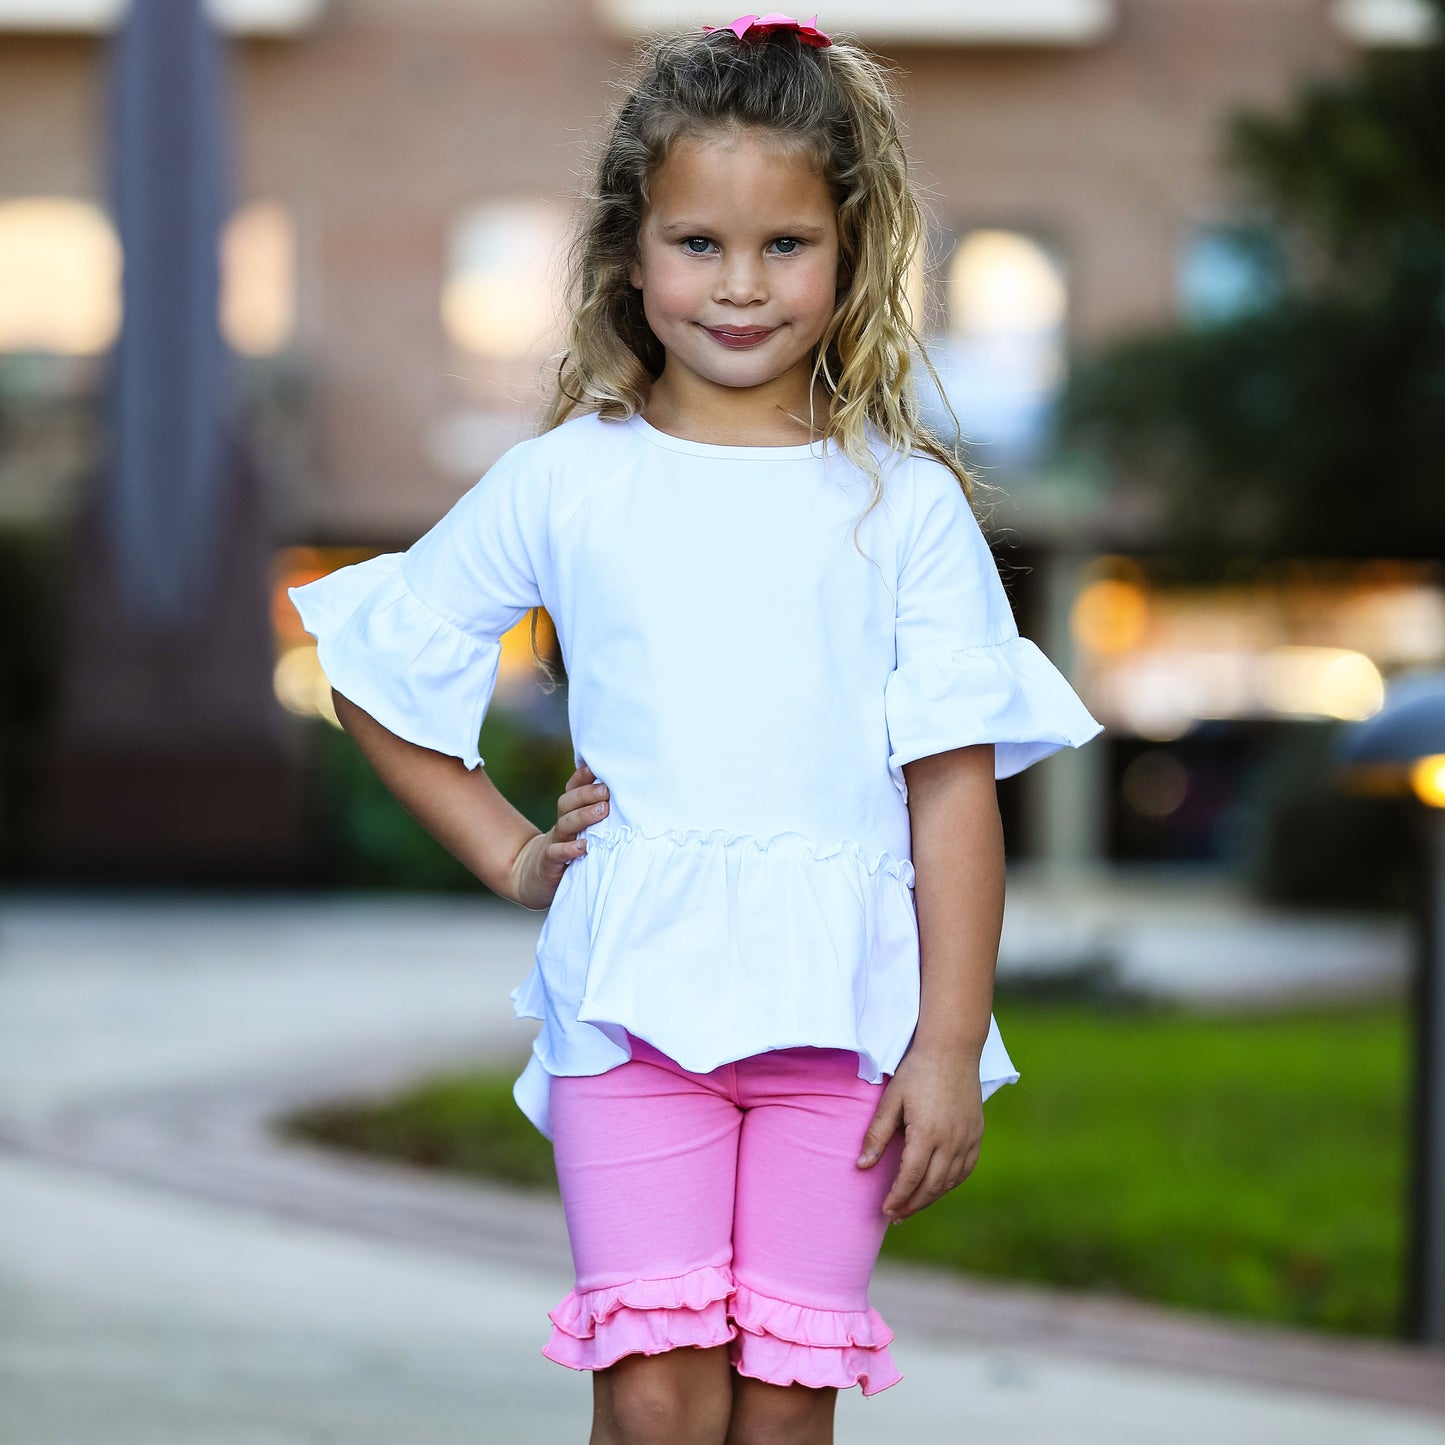 AnnLoren Little Toddler Big Girls' Angel Sleeve White Boutique Ruffle Top Shirt Clothing Sizes 2/3T - 7/8